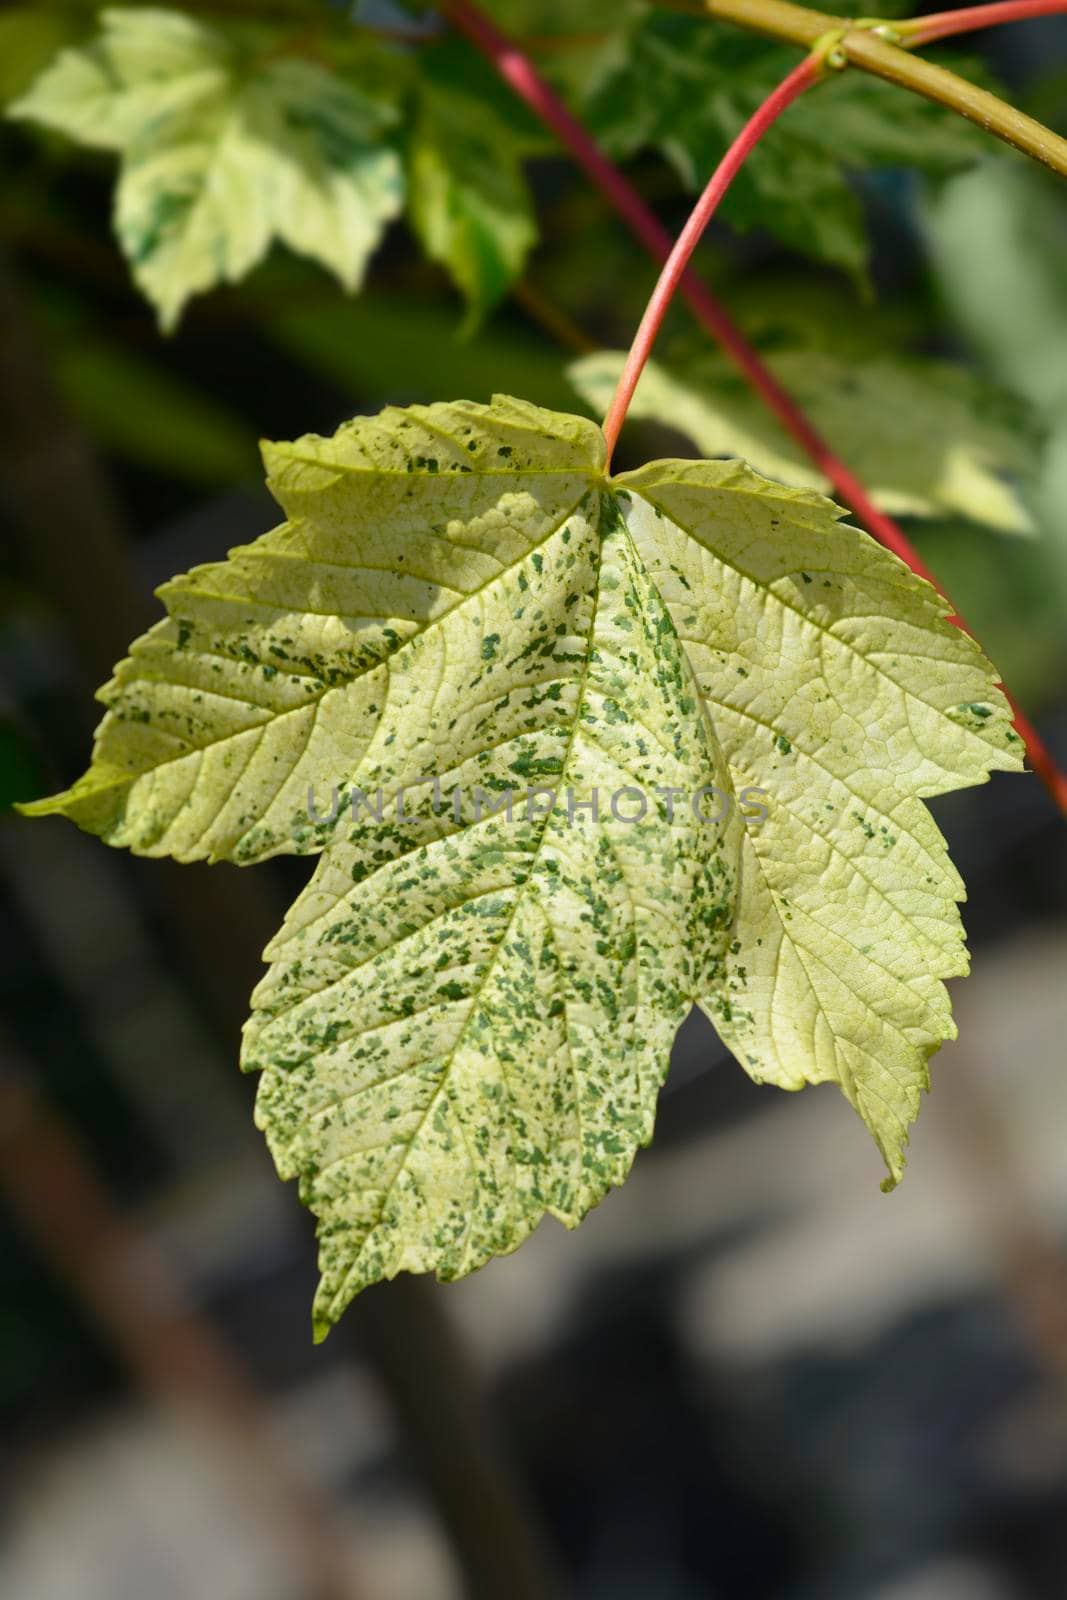 Sycamore Leopoldii leaves - Latin name - Acer pseudoplatanus Leopoldii